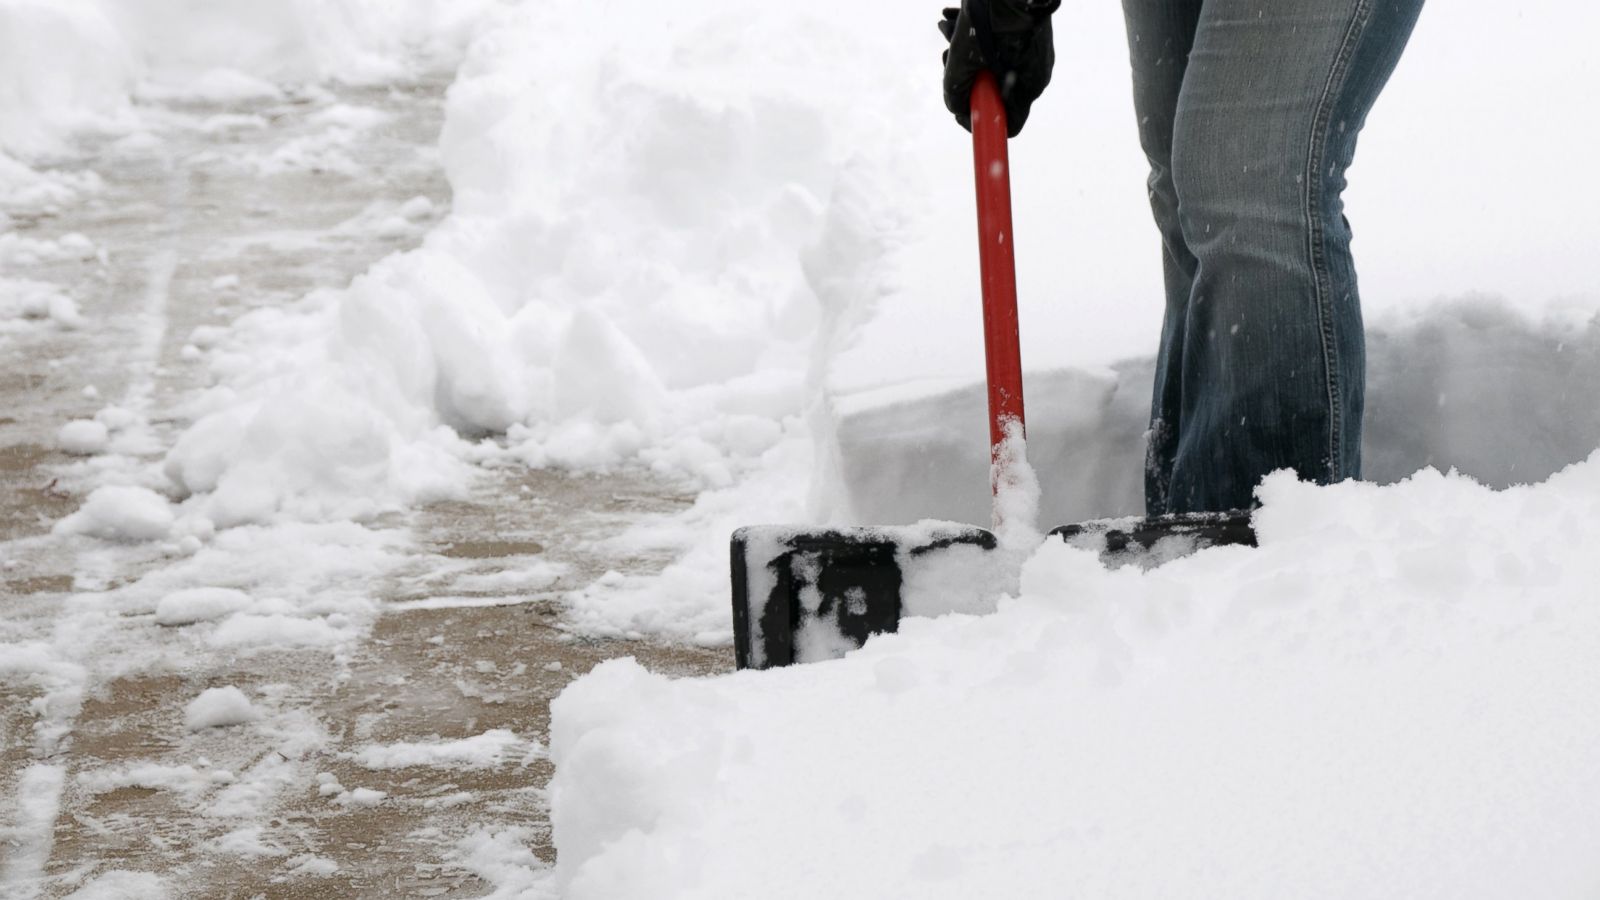 World's Best Snow Removal Machine for Sidewalks 